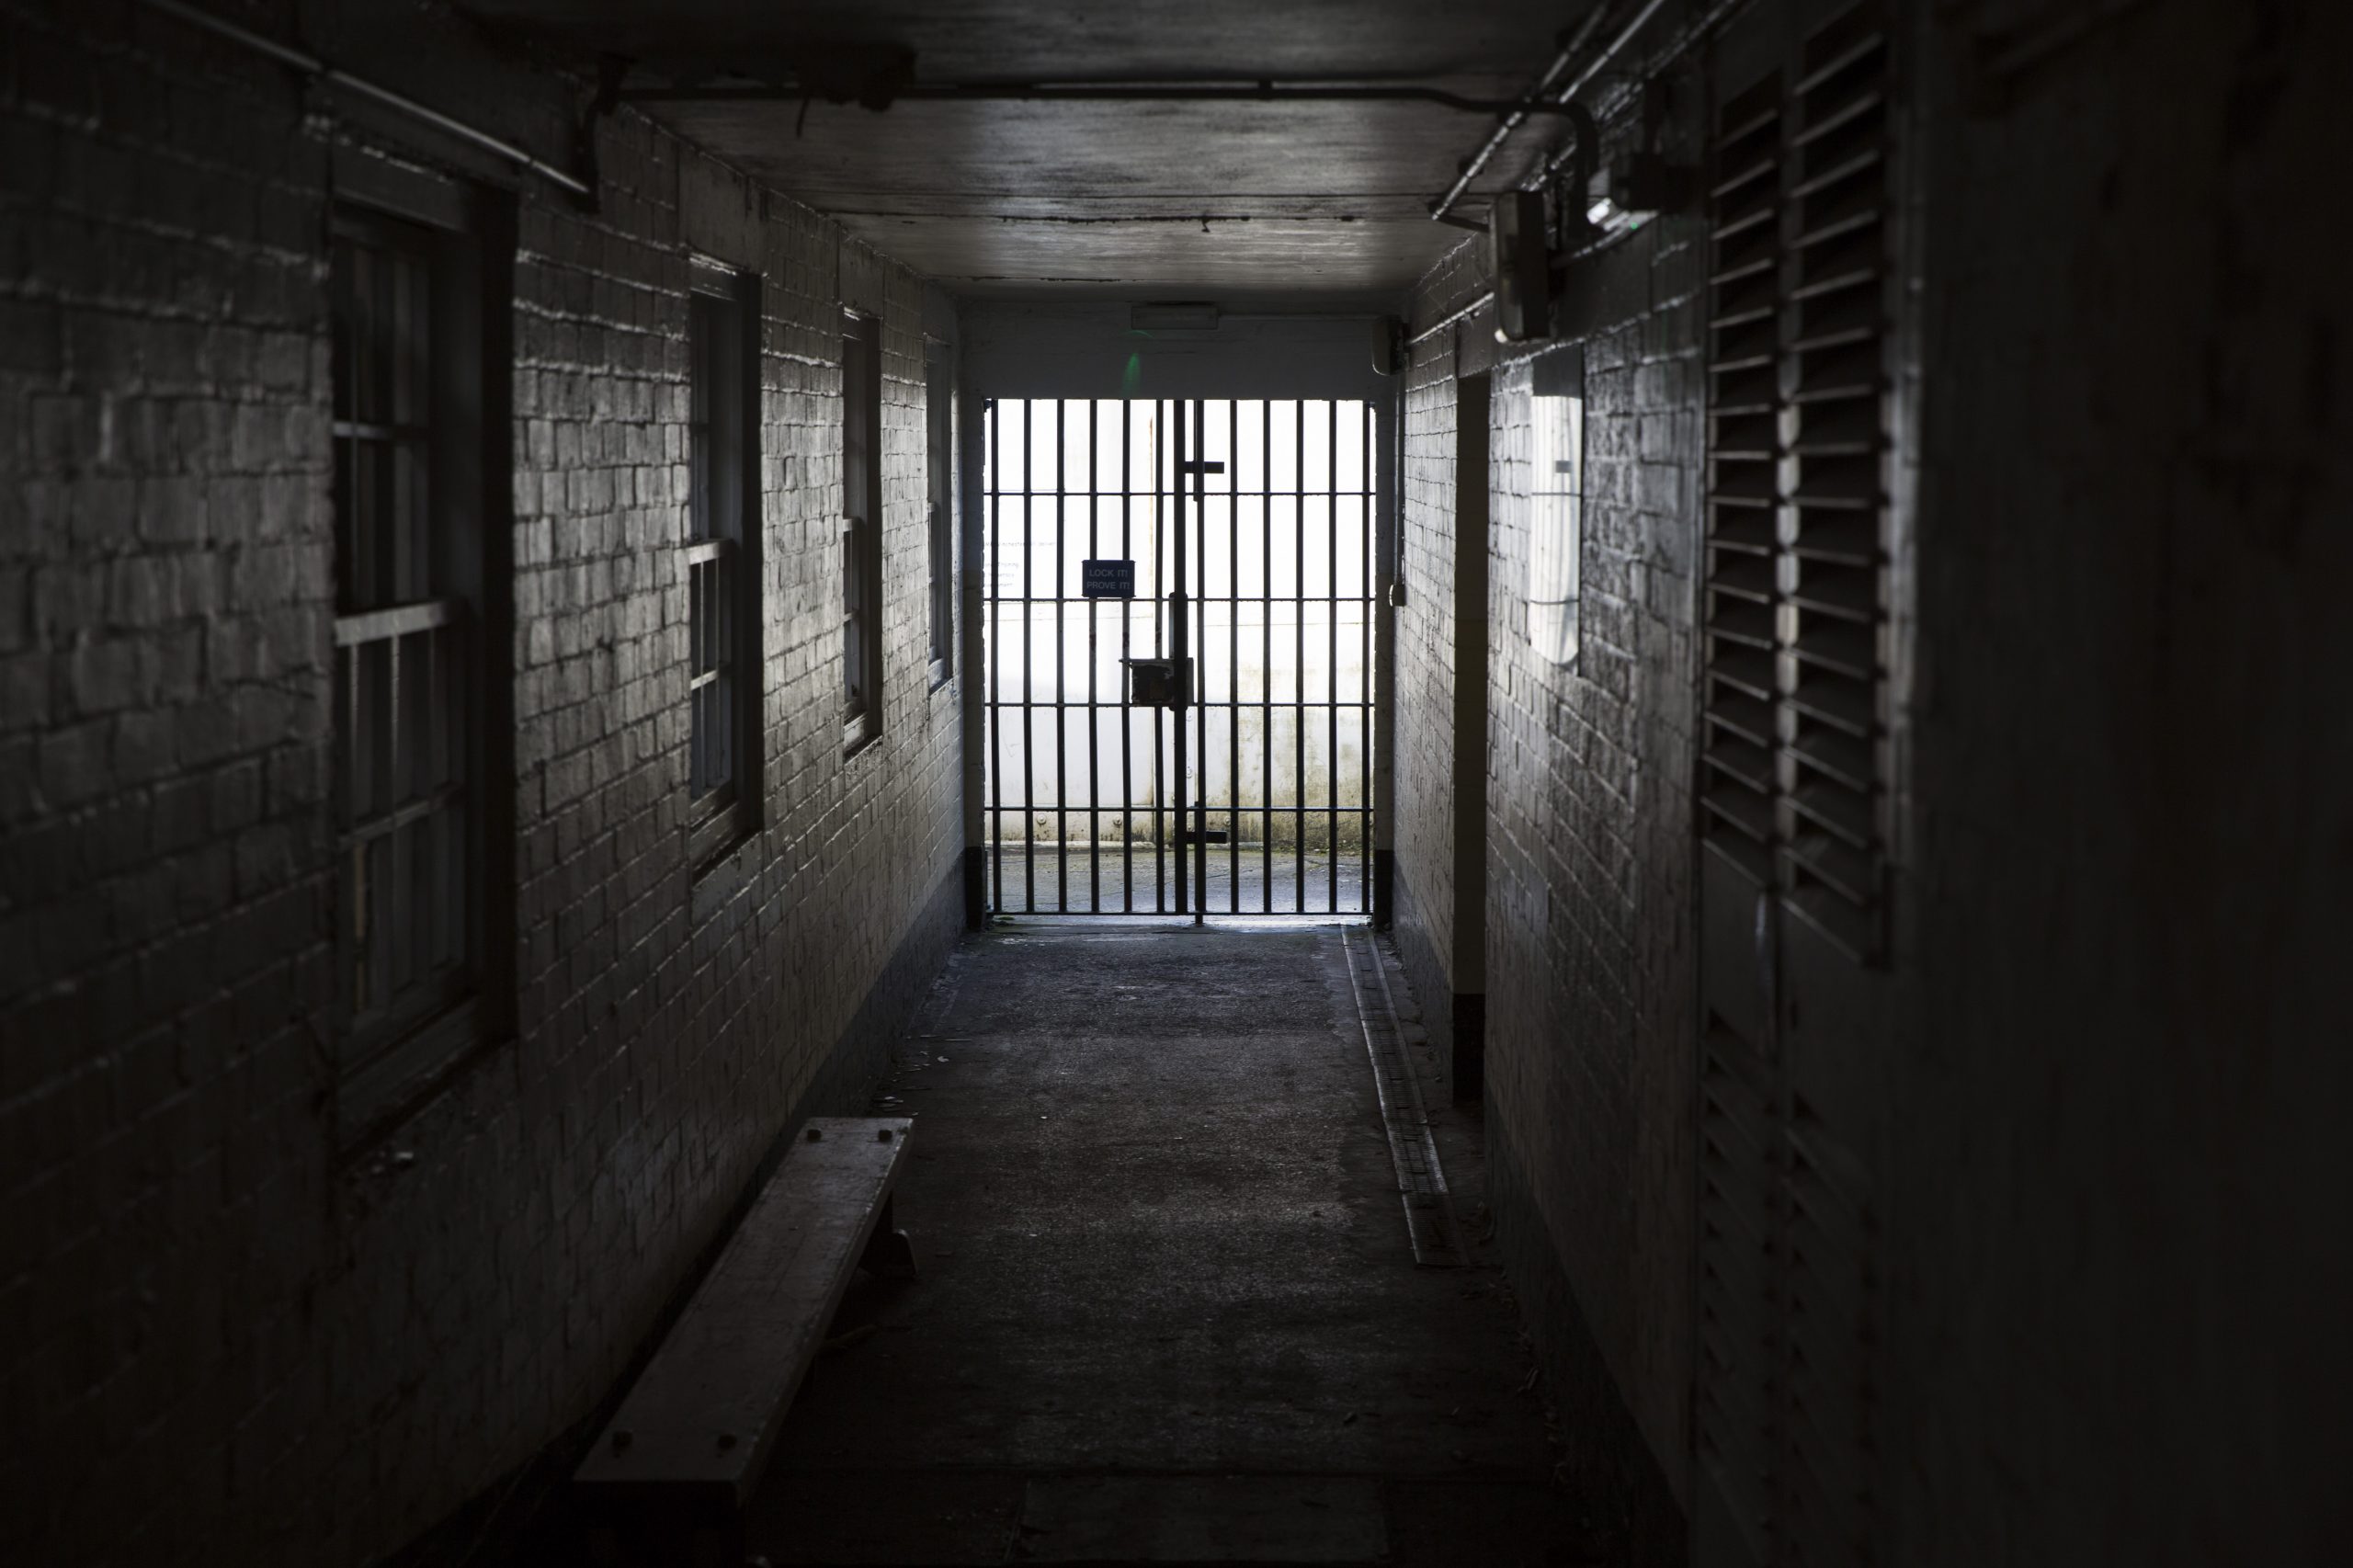 ‘Persistent’ racial discrimination across prisons, watchdog reveals